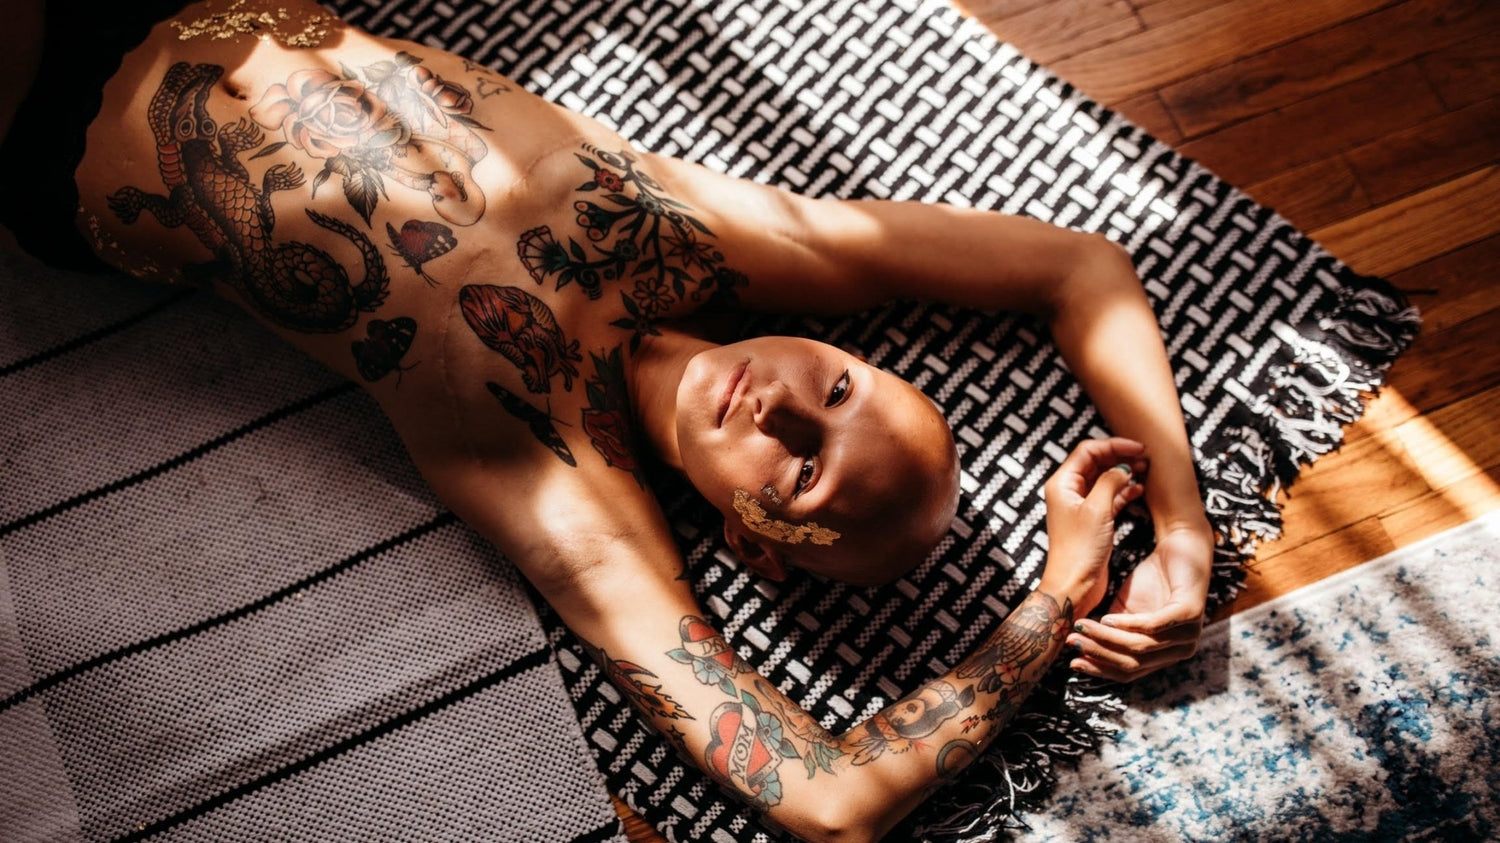 10 Beautiful Cancer Survivor Tattoos